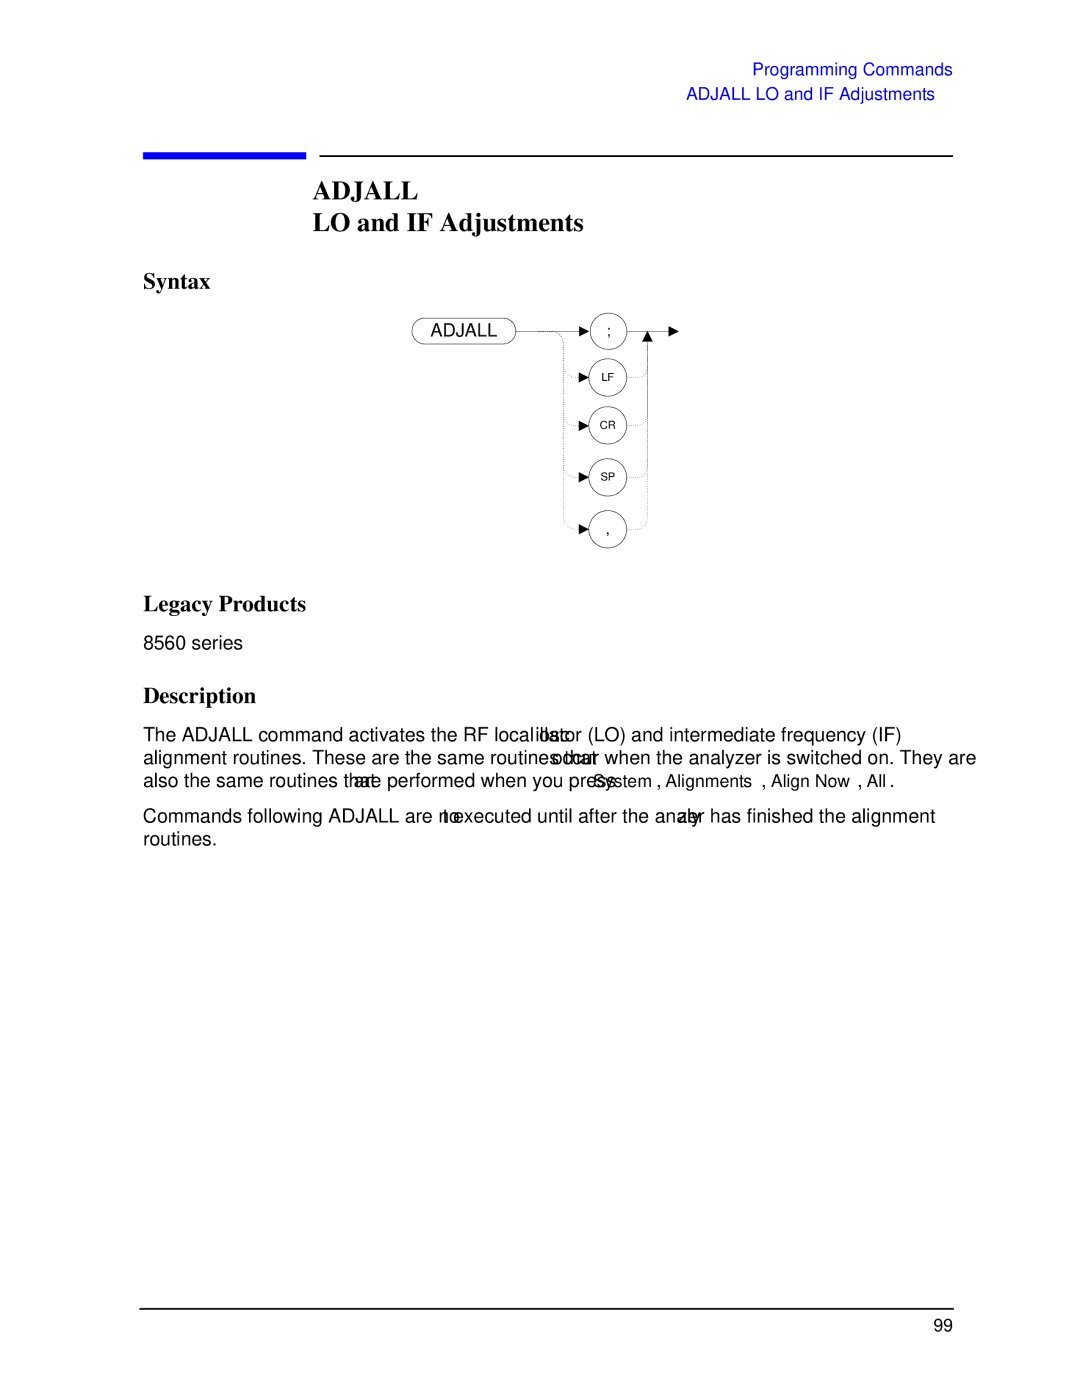 Agilent Technologies N9030a manual Adjall, LO and if Adjustments 